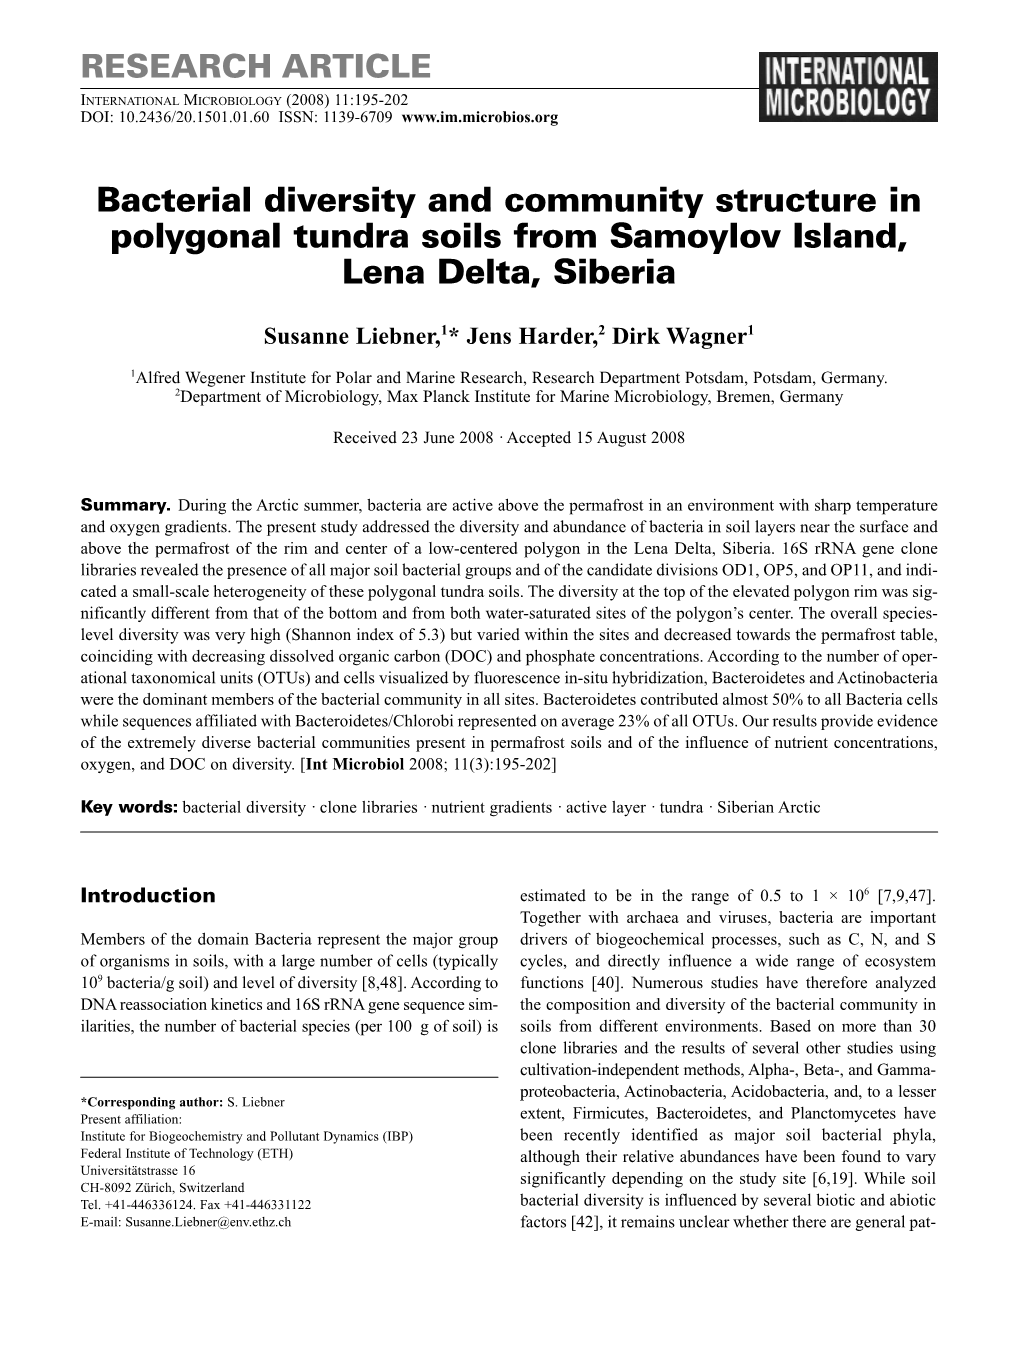 Bacterial Diversity and Community Structure in Polygonal Tundra Soils from Samoylov Island, Lena Delta, Siberia